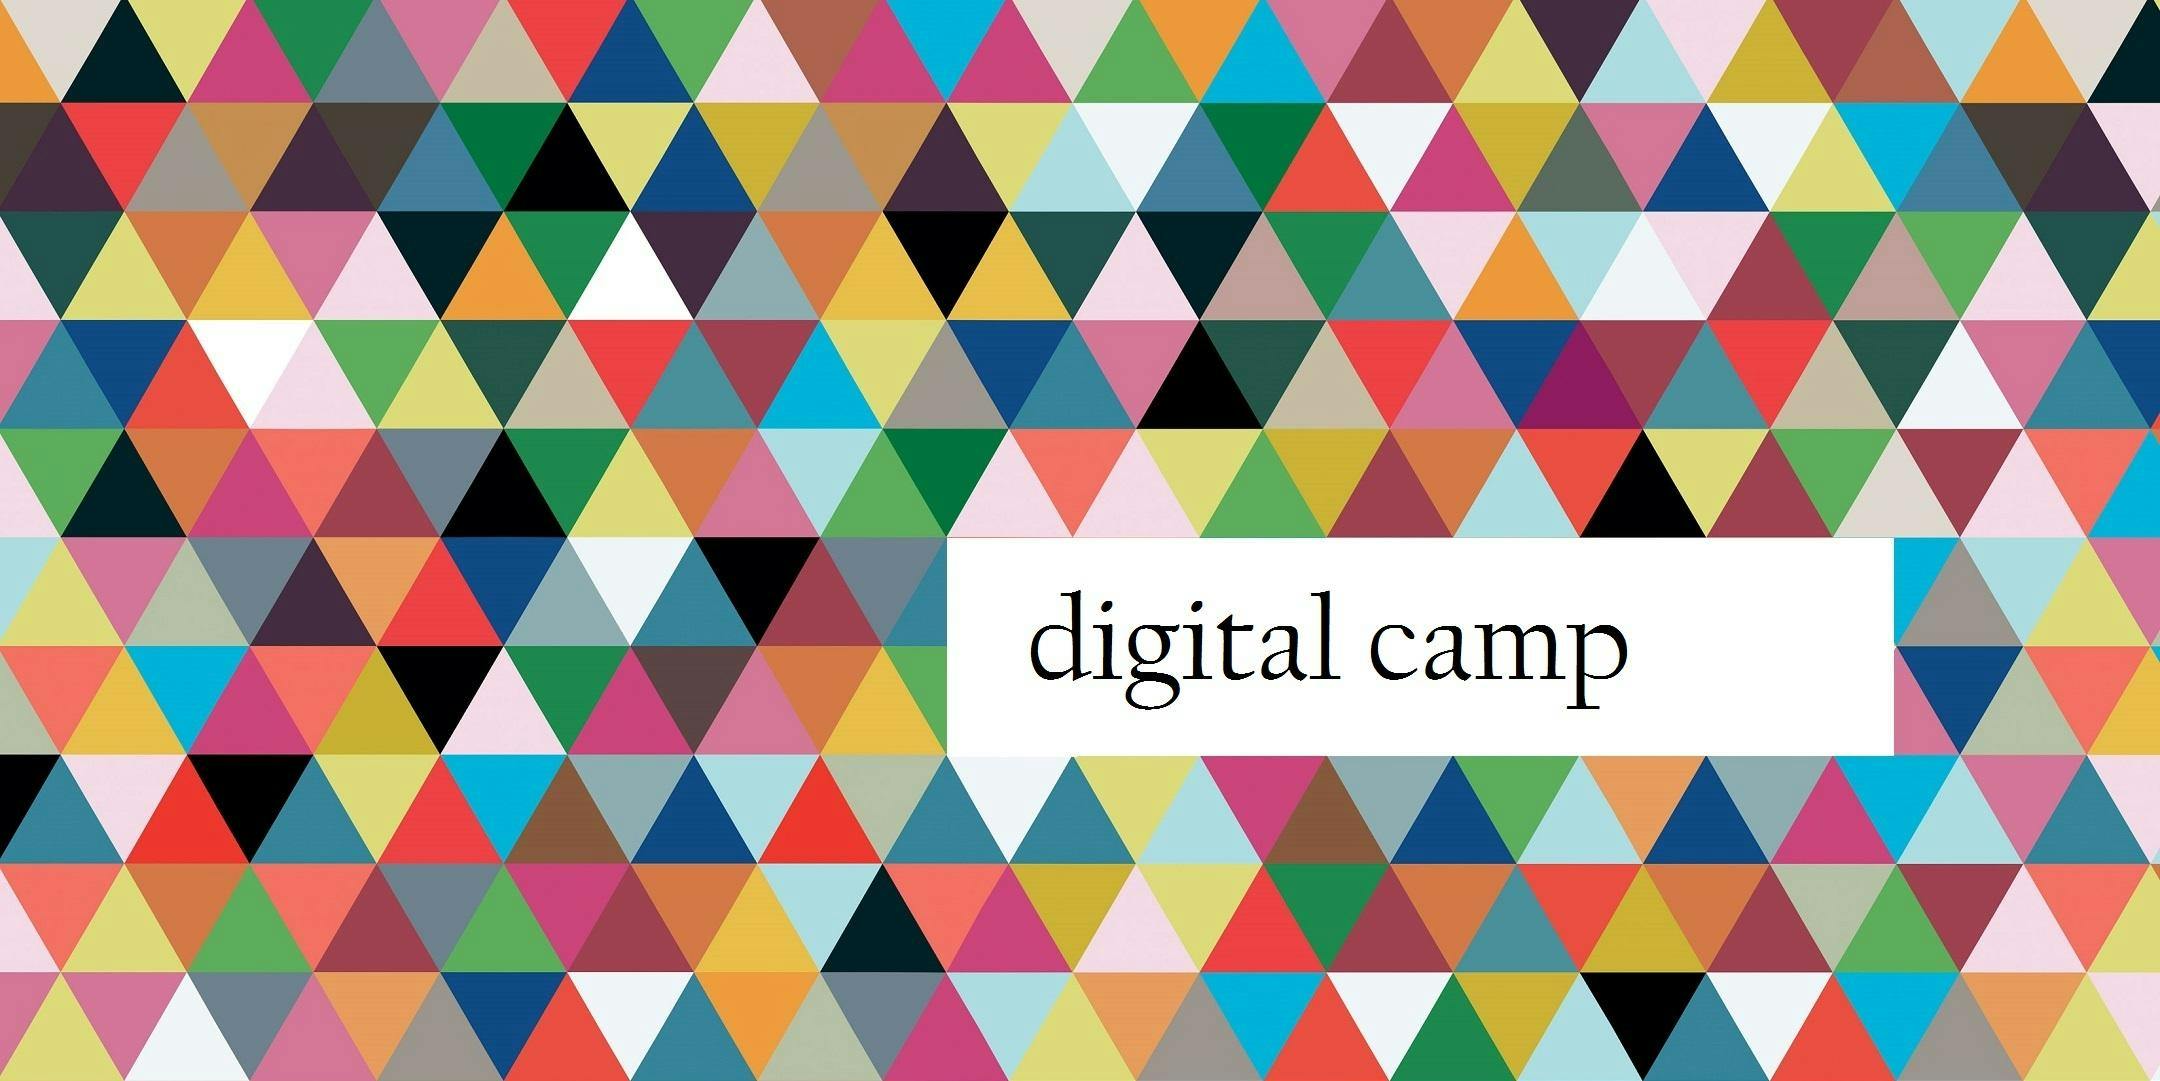 Digital Camp